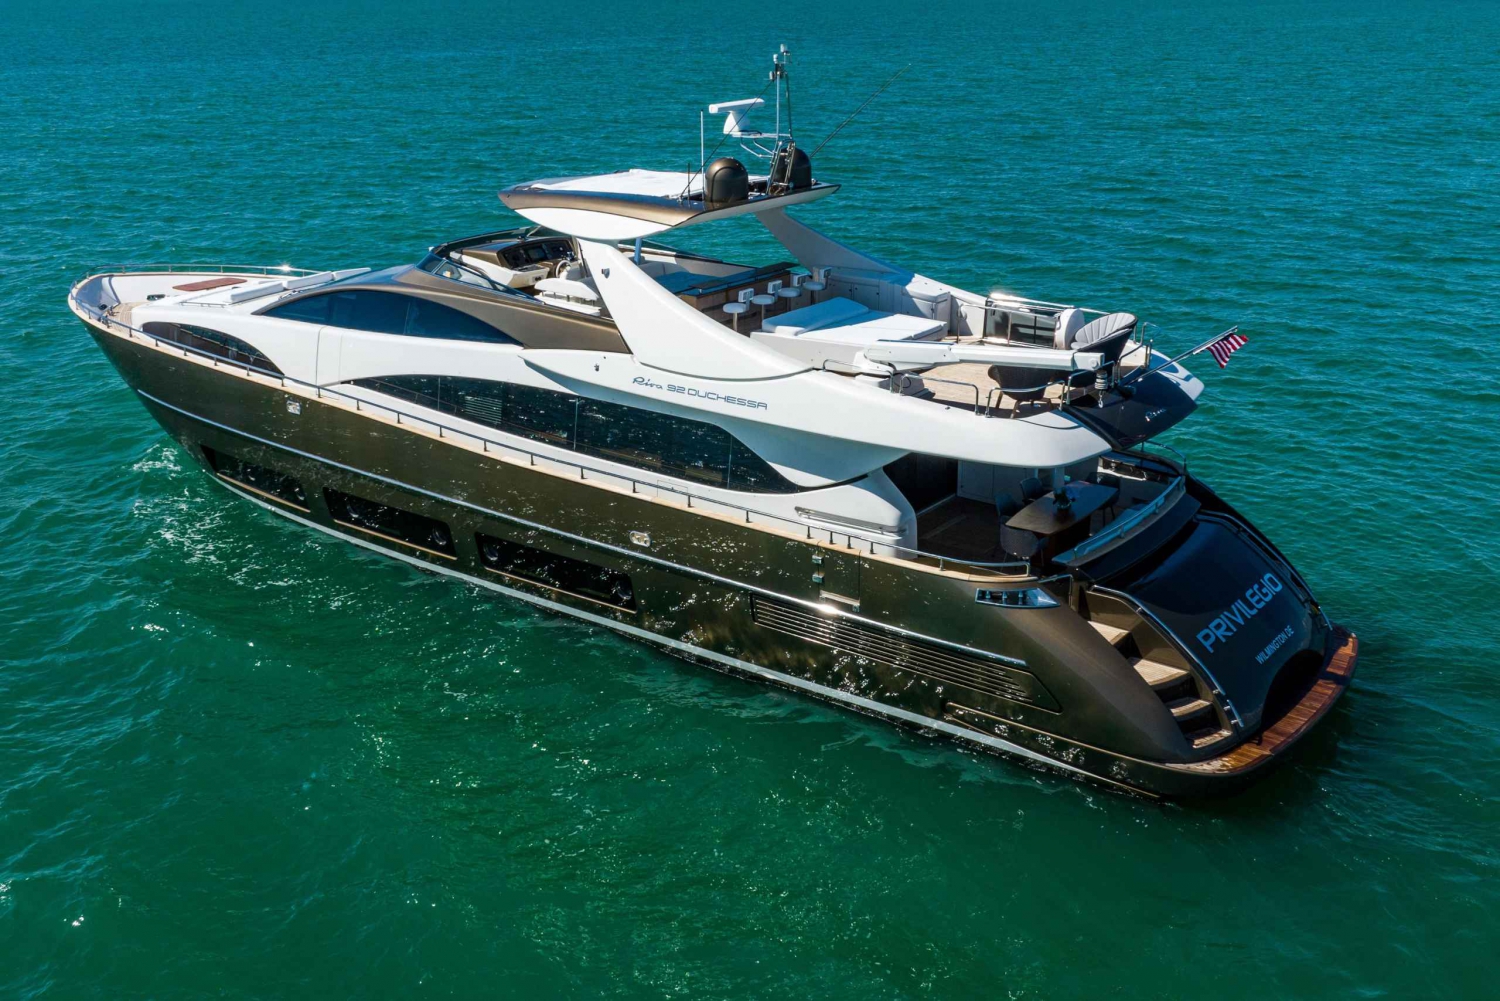 Luksus Yacht Charter